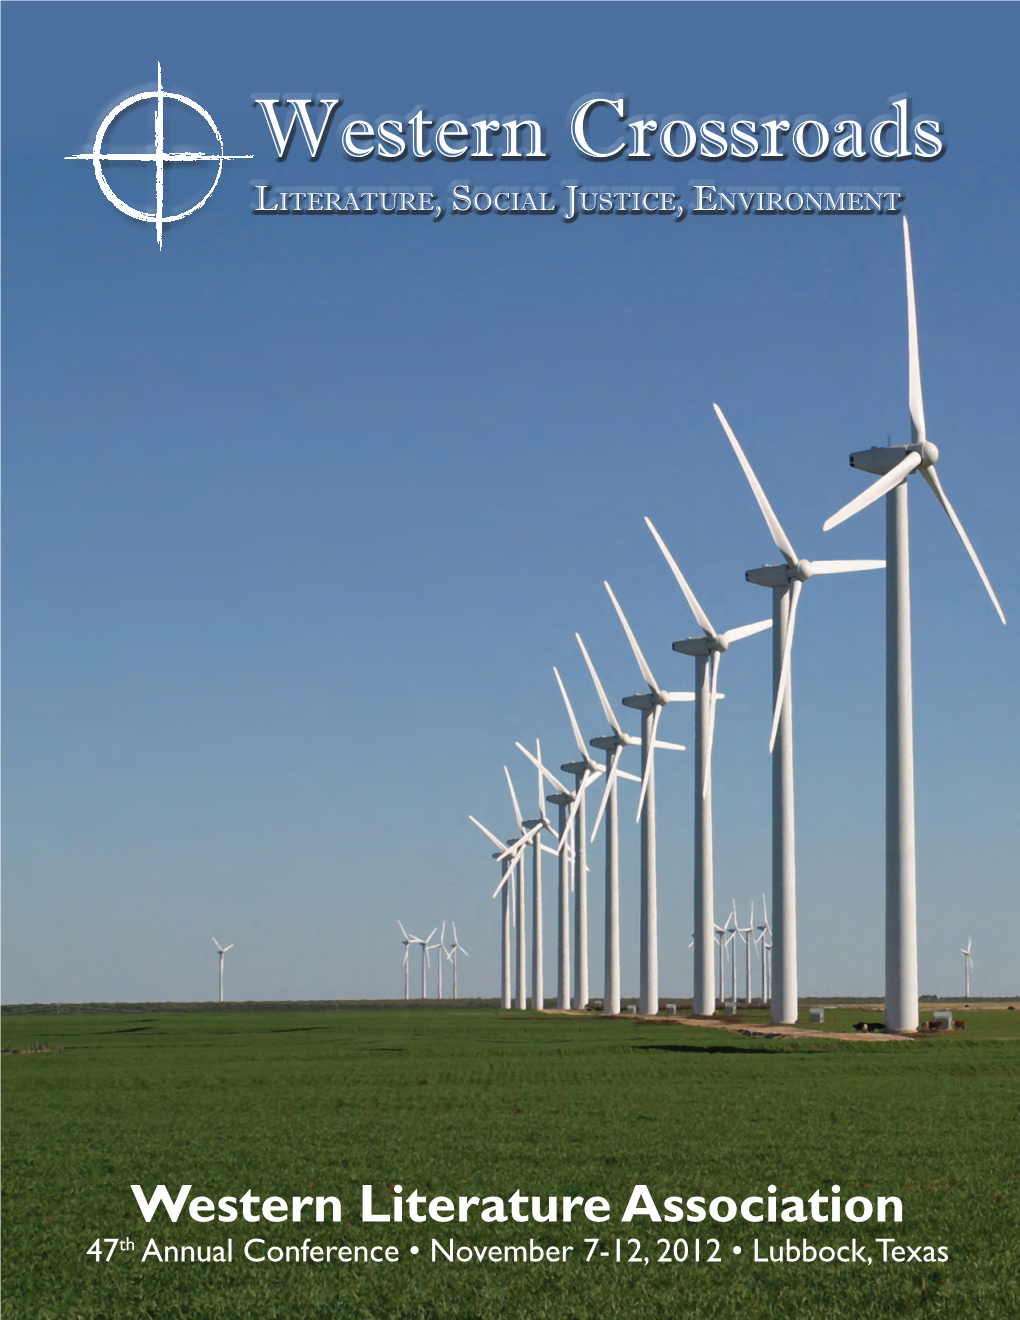 Western Crossroads Literature, Social Justice, Environment